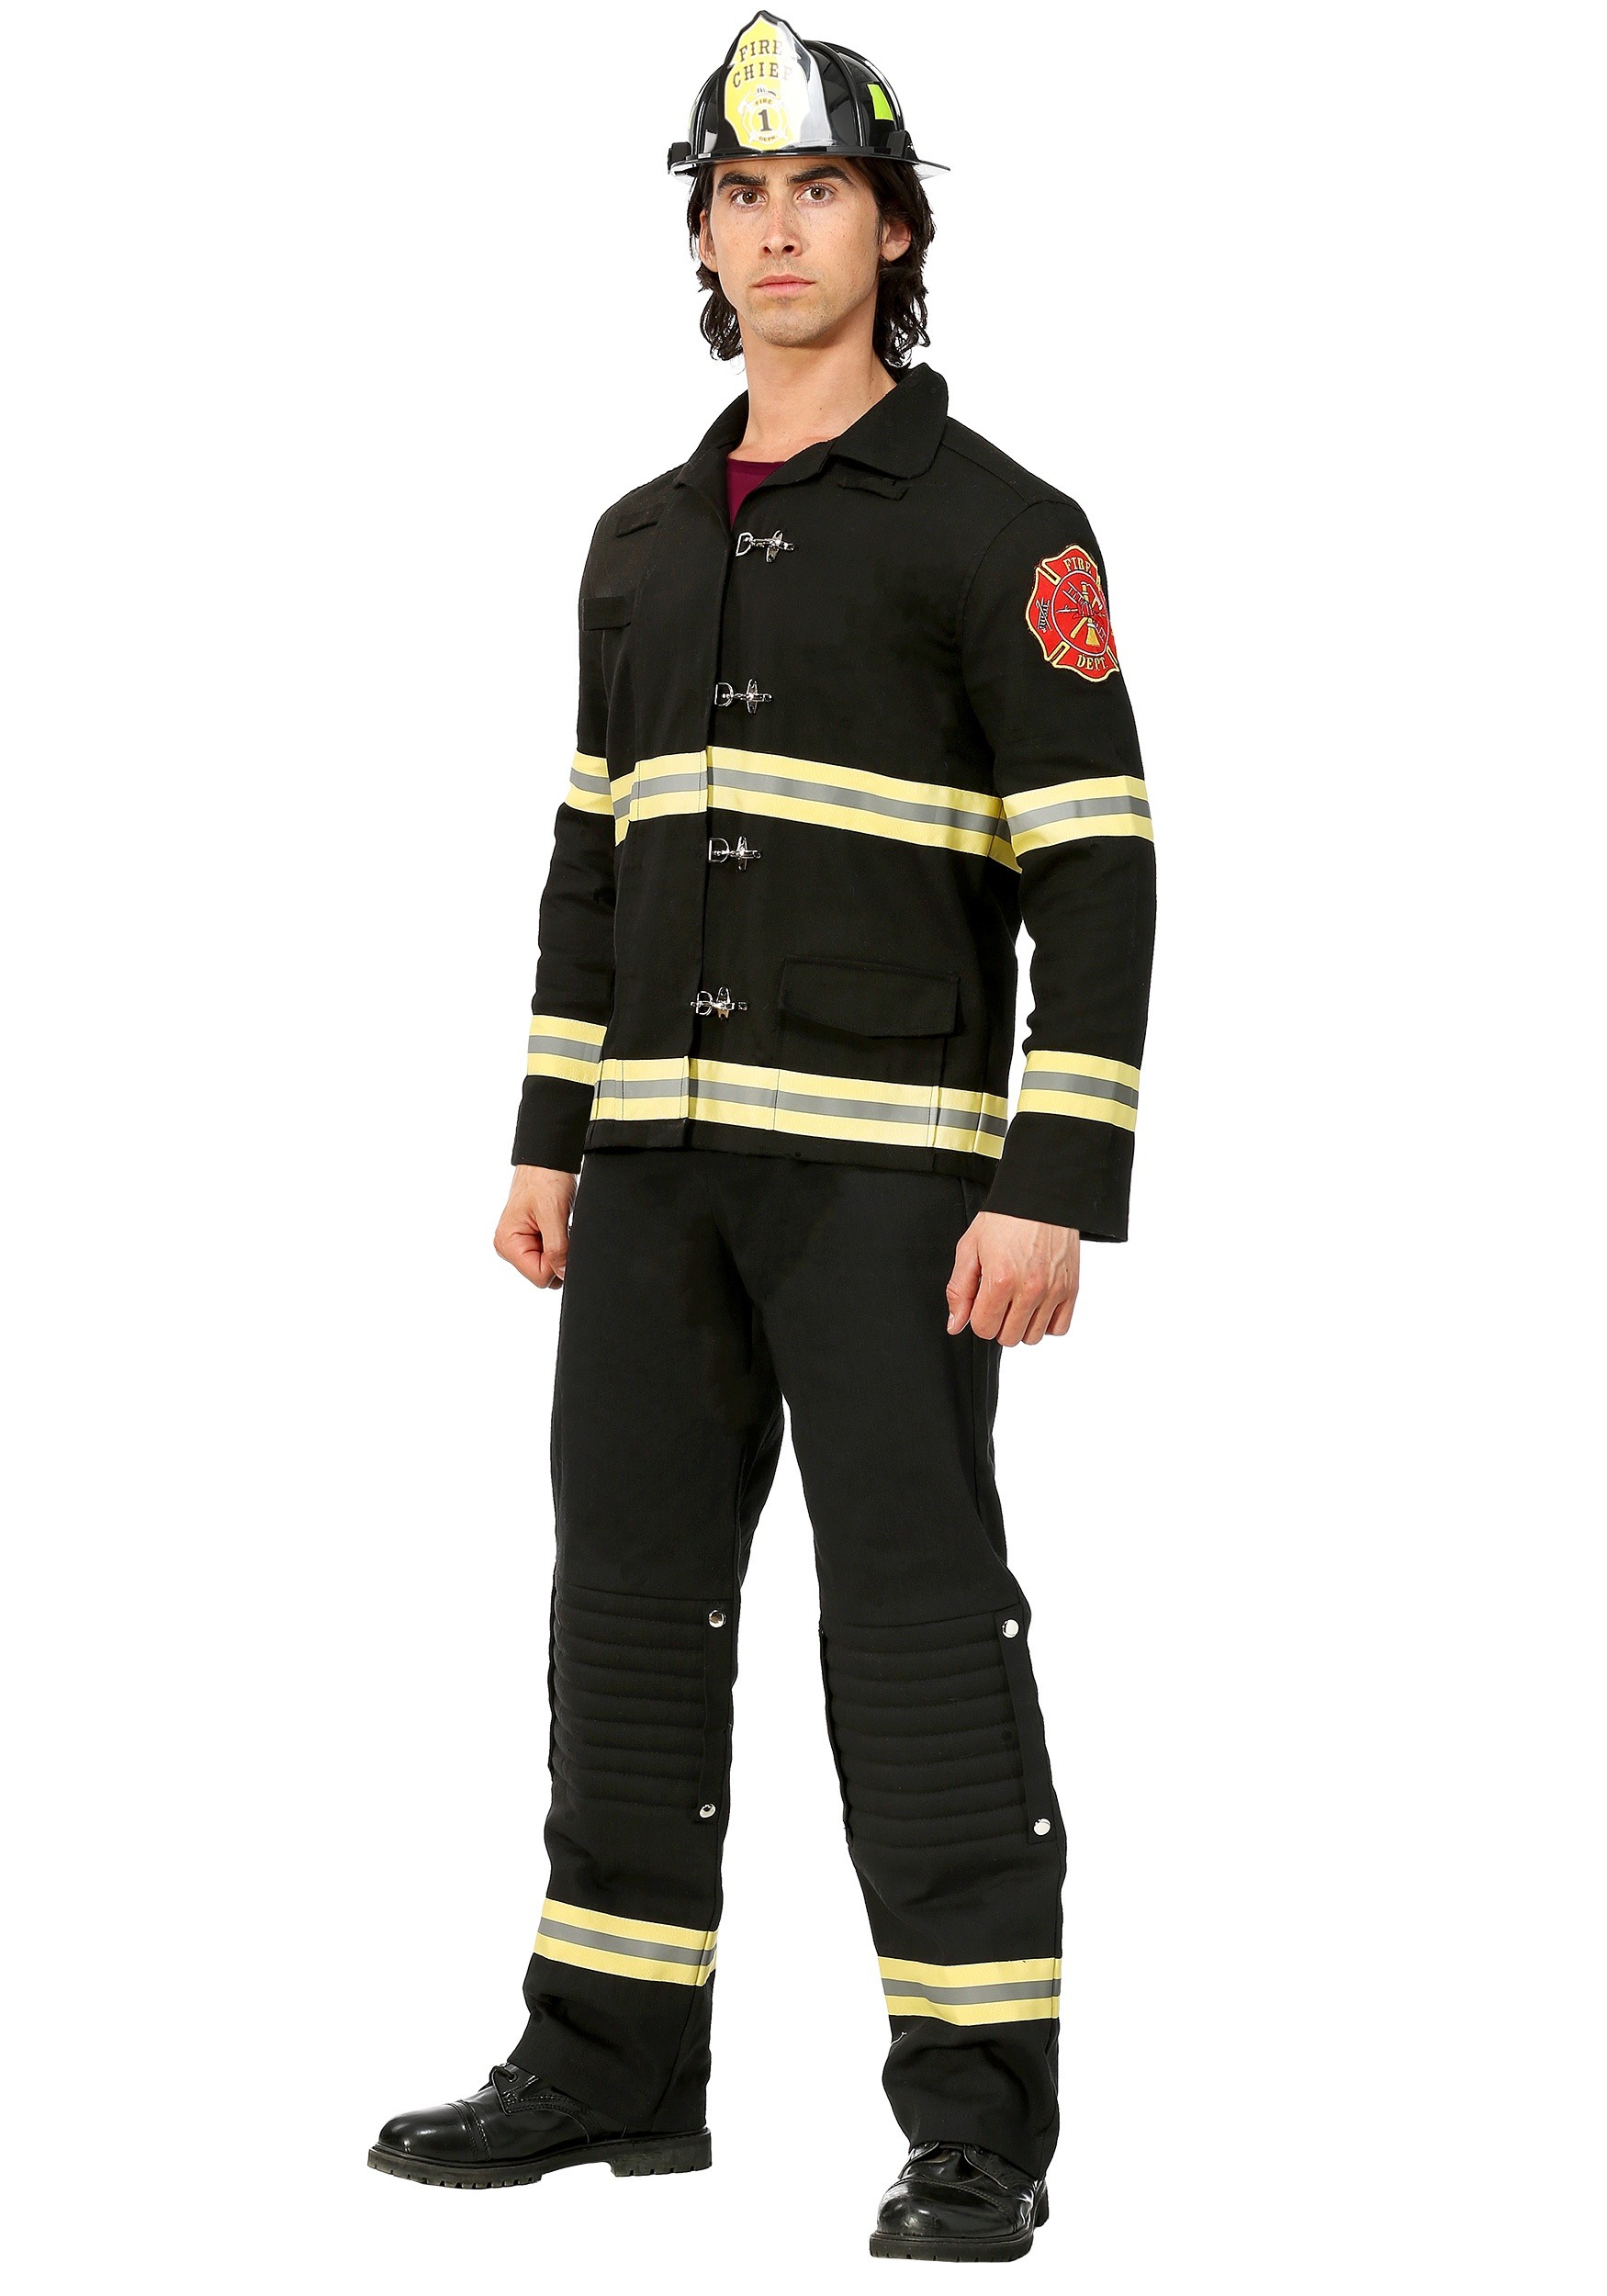 Black Uniform Firefighter Adult Fancy Dress Costume